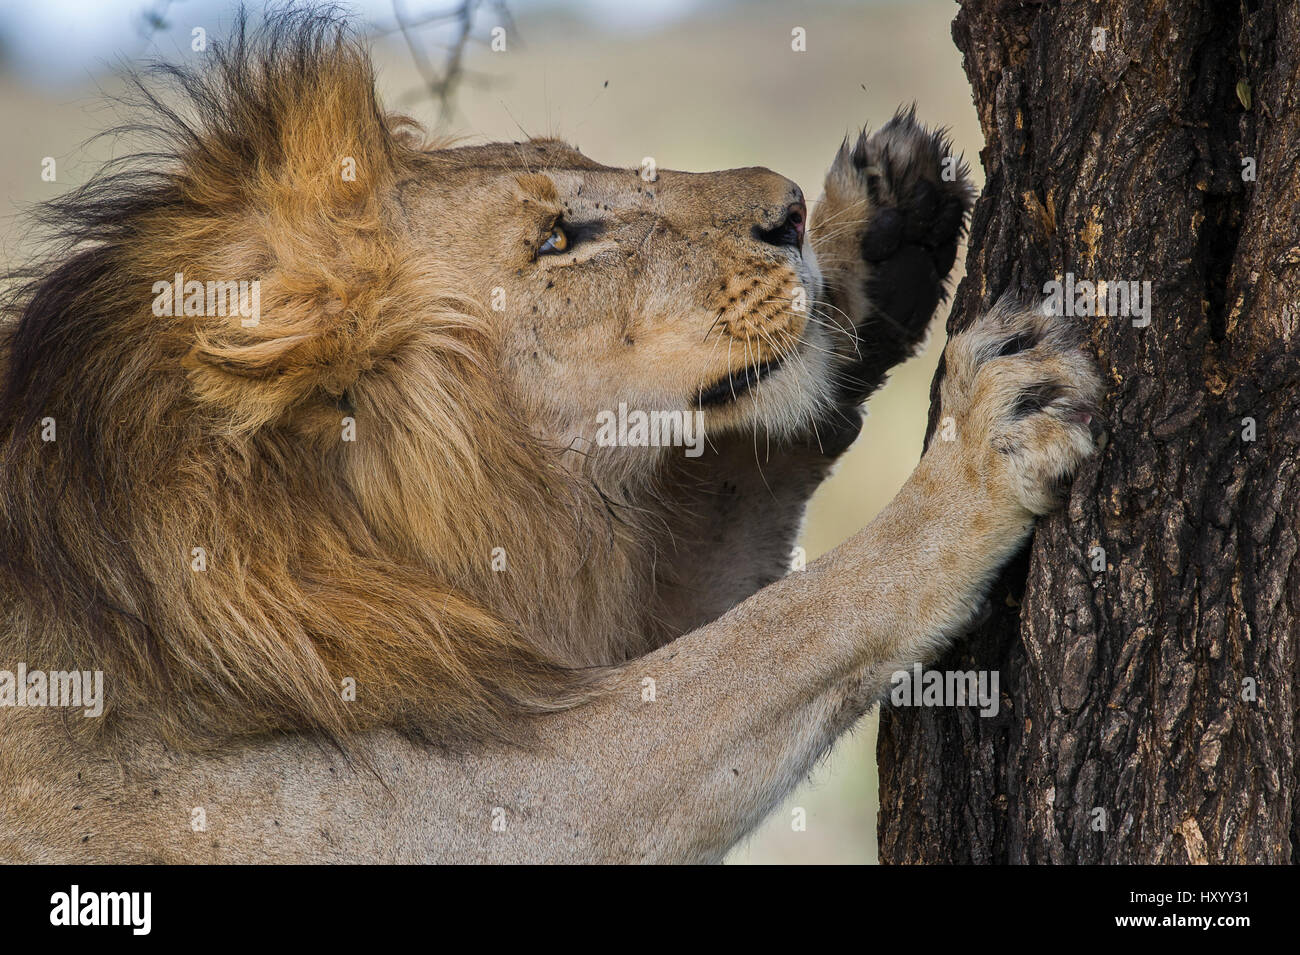 Männlichen Afrikanische Löwen (Panthera Leo) kratzen Baum am großen Moor, Nogorongoro Conservation Area / Serengeti Nationalpark, Tansania. März. Stockfoto